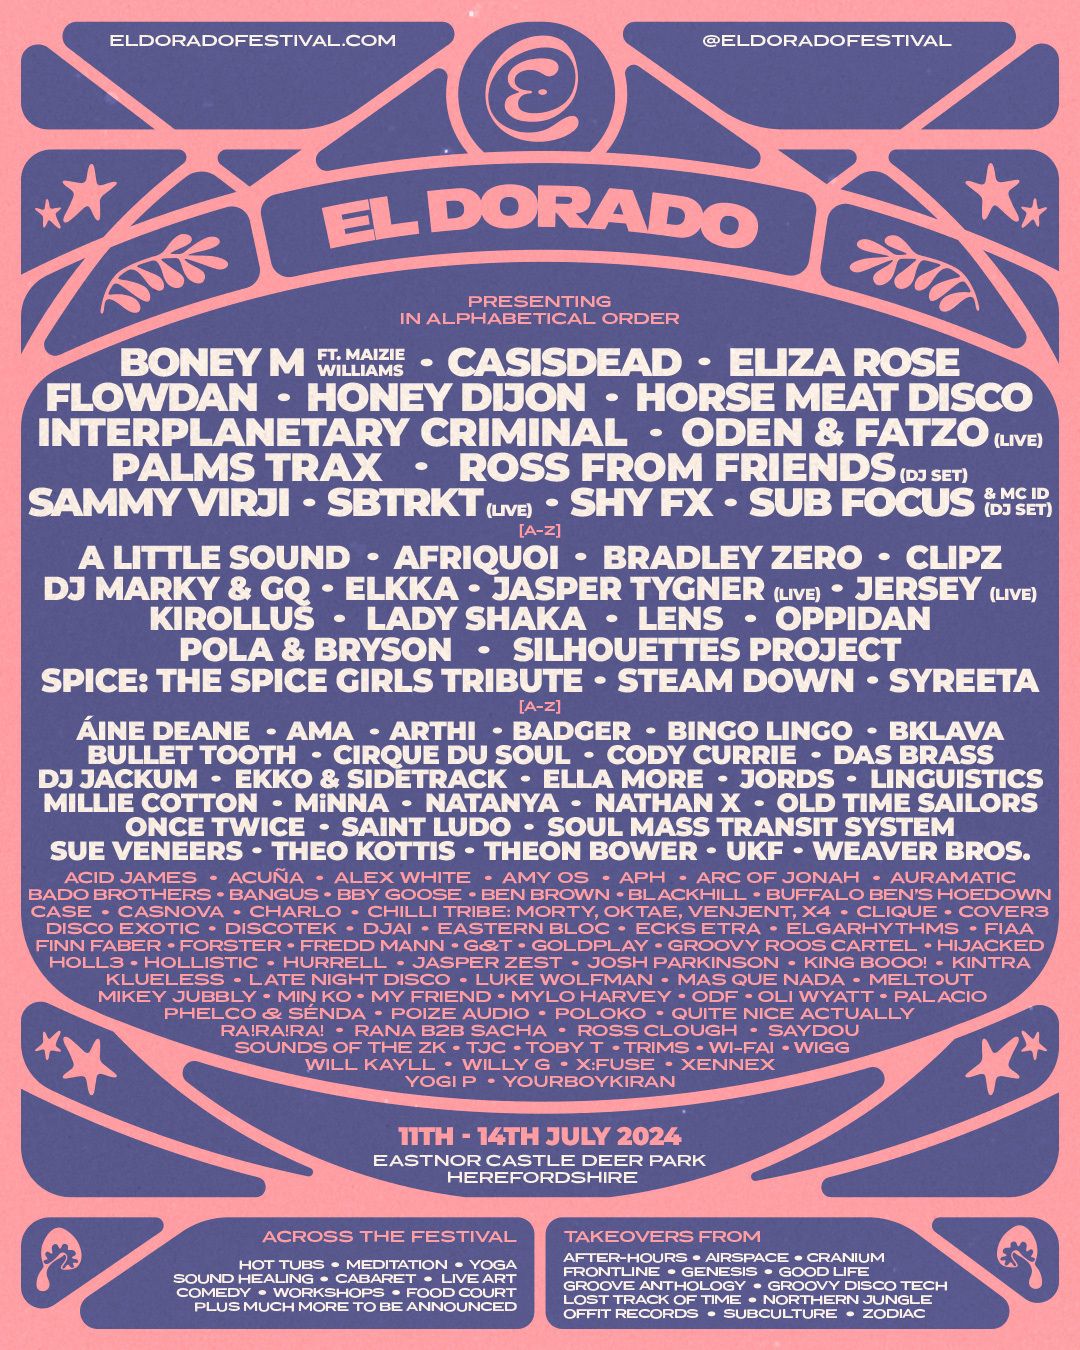 El Dorado Festival Reveals Full 2024 Lineup That Festival Site